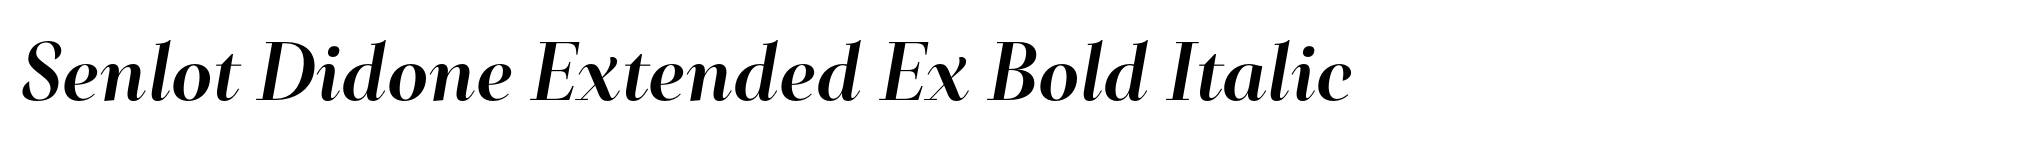 Senlot Didone Extended Ex Bold Italic image